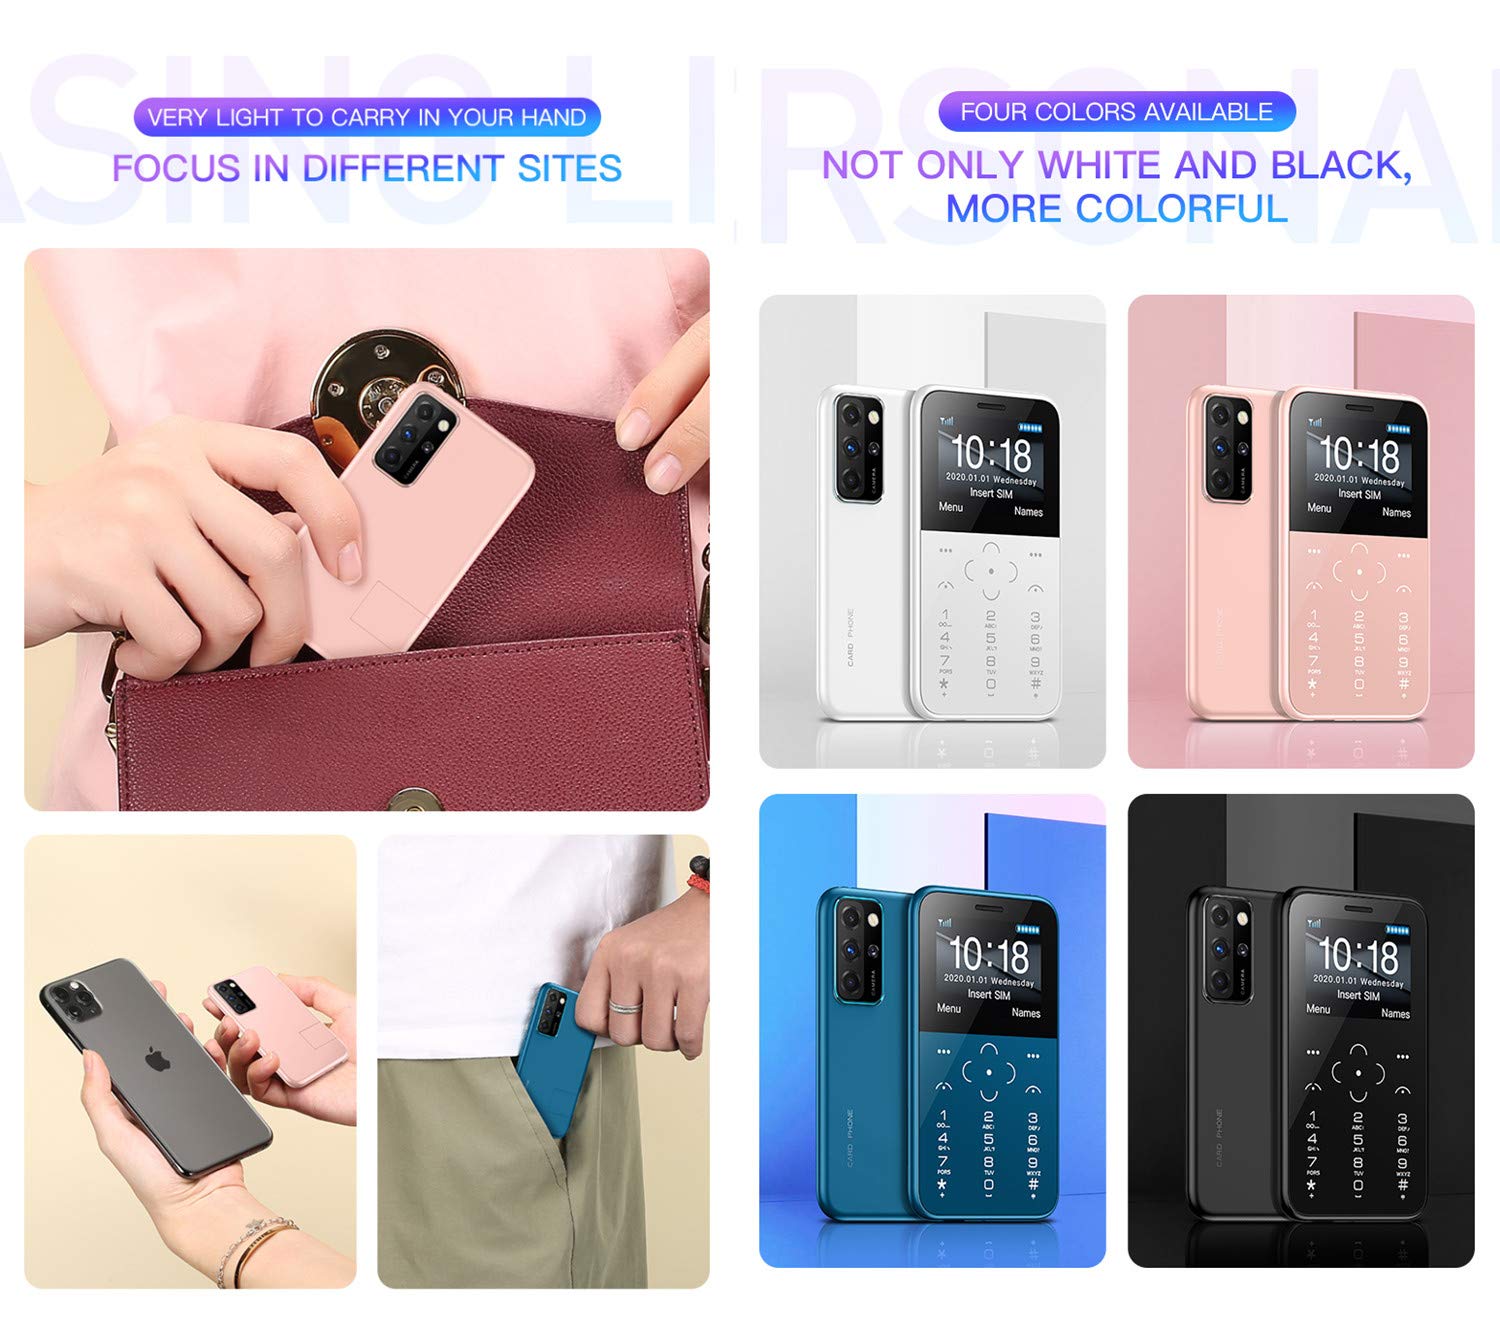 Tuanzi F1 Smallest Flip Cellphone F1 GSM Unlocked 2G Mini Phone 32MB+32MB MTK6261 300mAh Bluetooth Mini Backup Pocket Portable Mobile Phone Gift for Kid (F18 Gold)